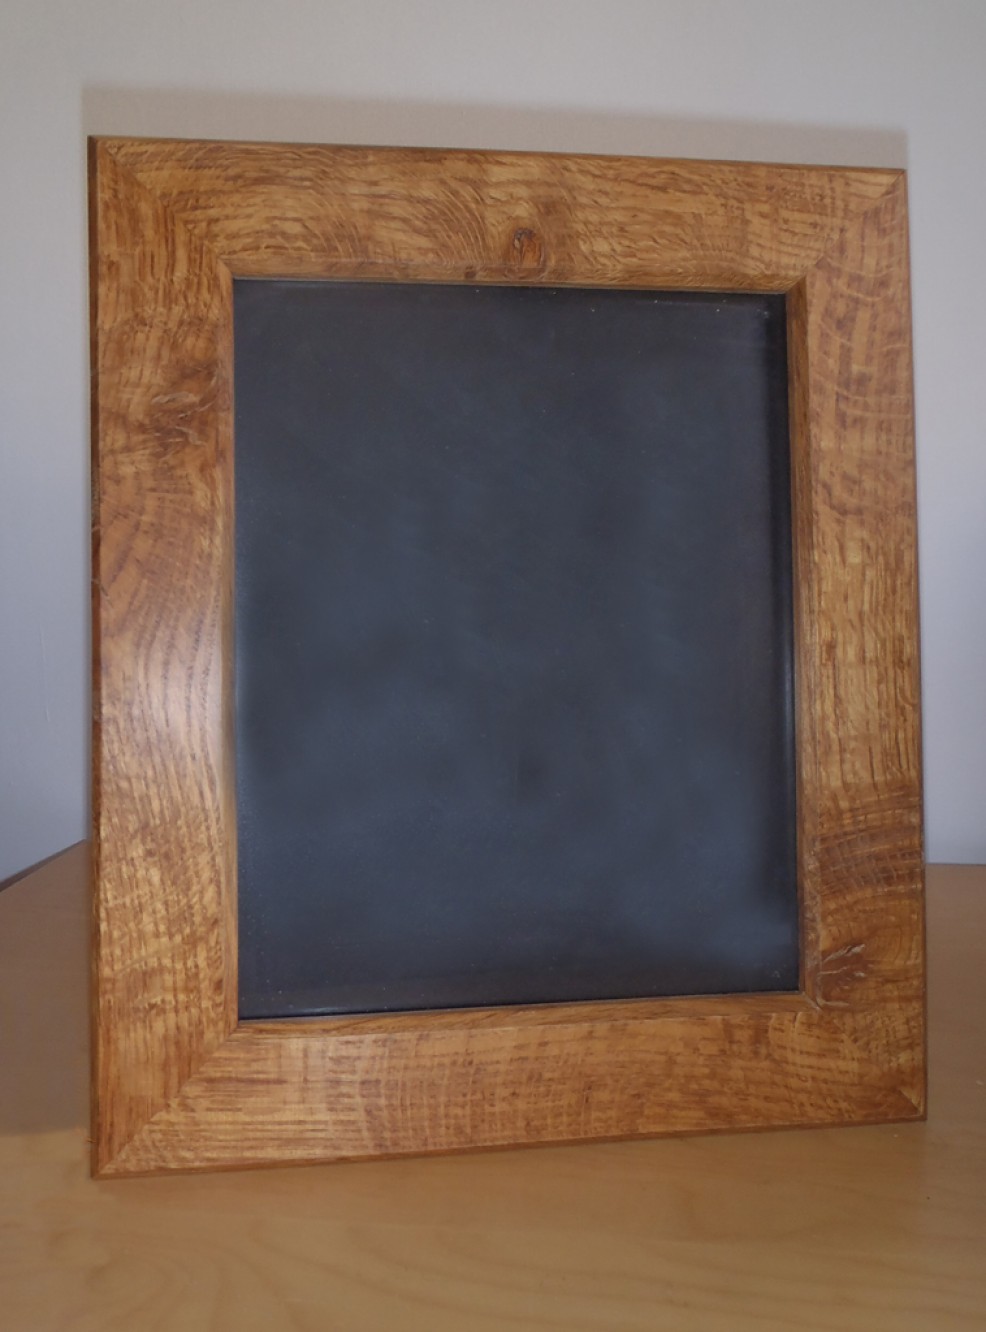 Traditional slate-style blackboard